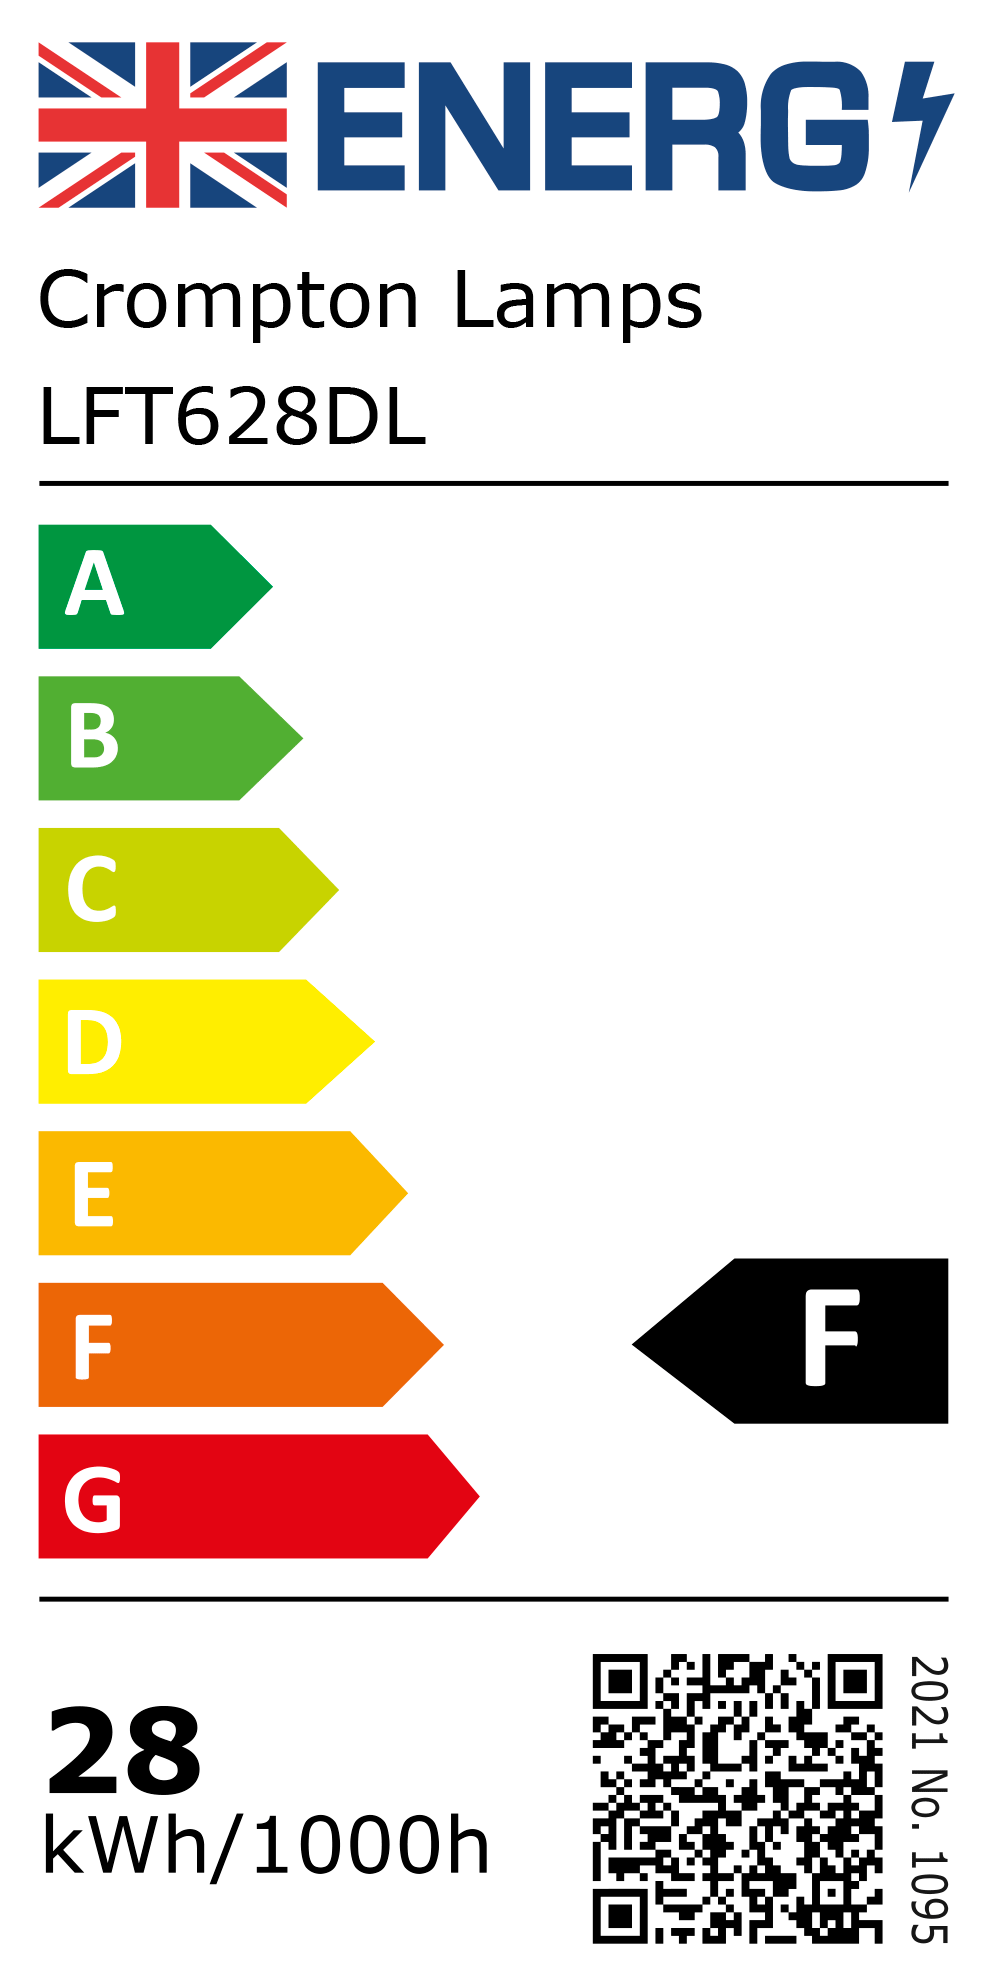 New 2021 Energy Rating Label: MPN LFT628DL